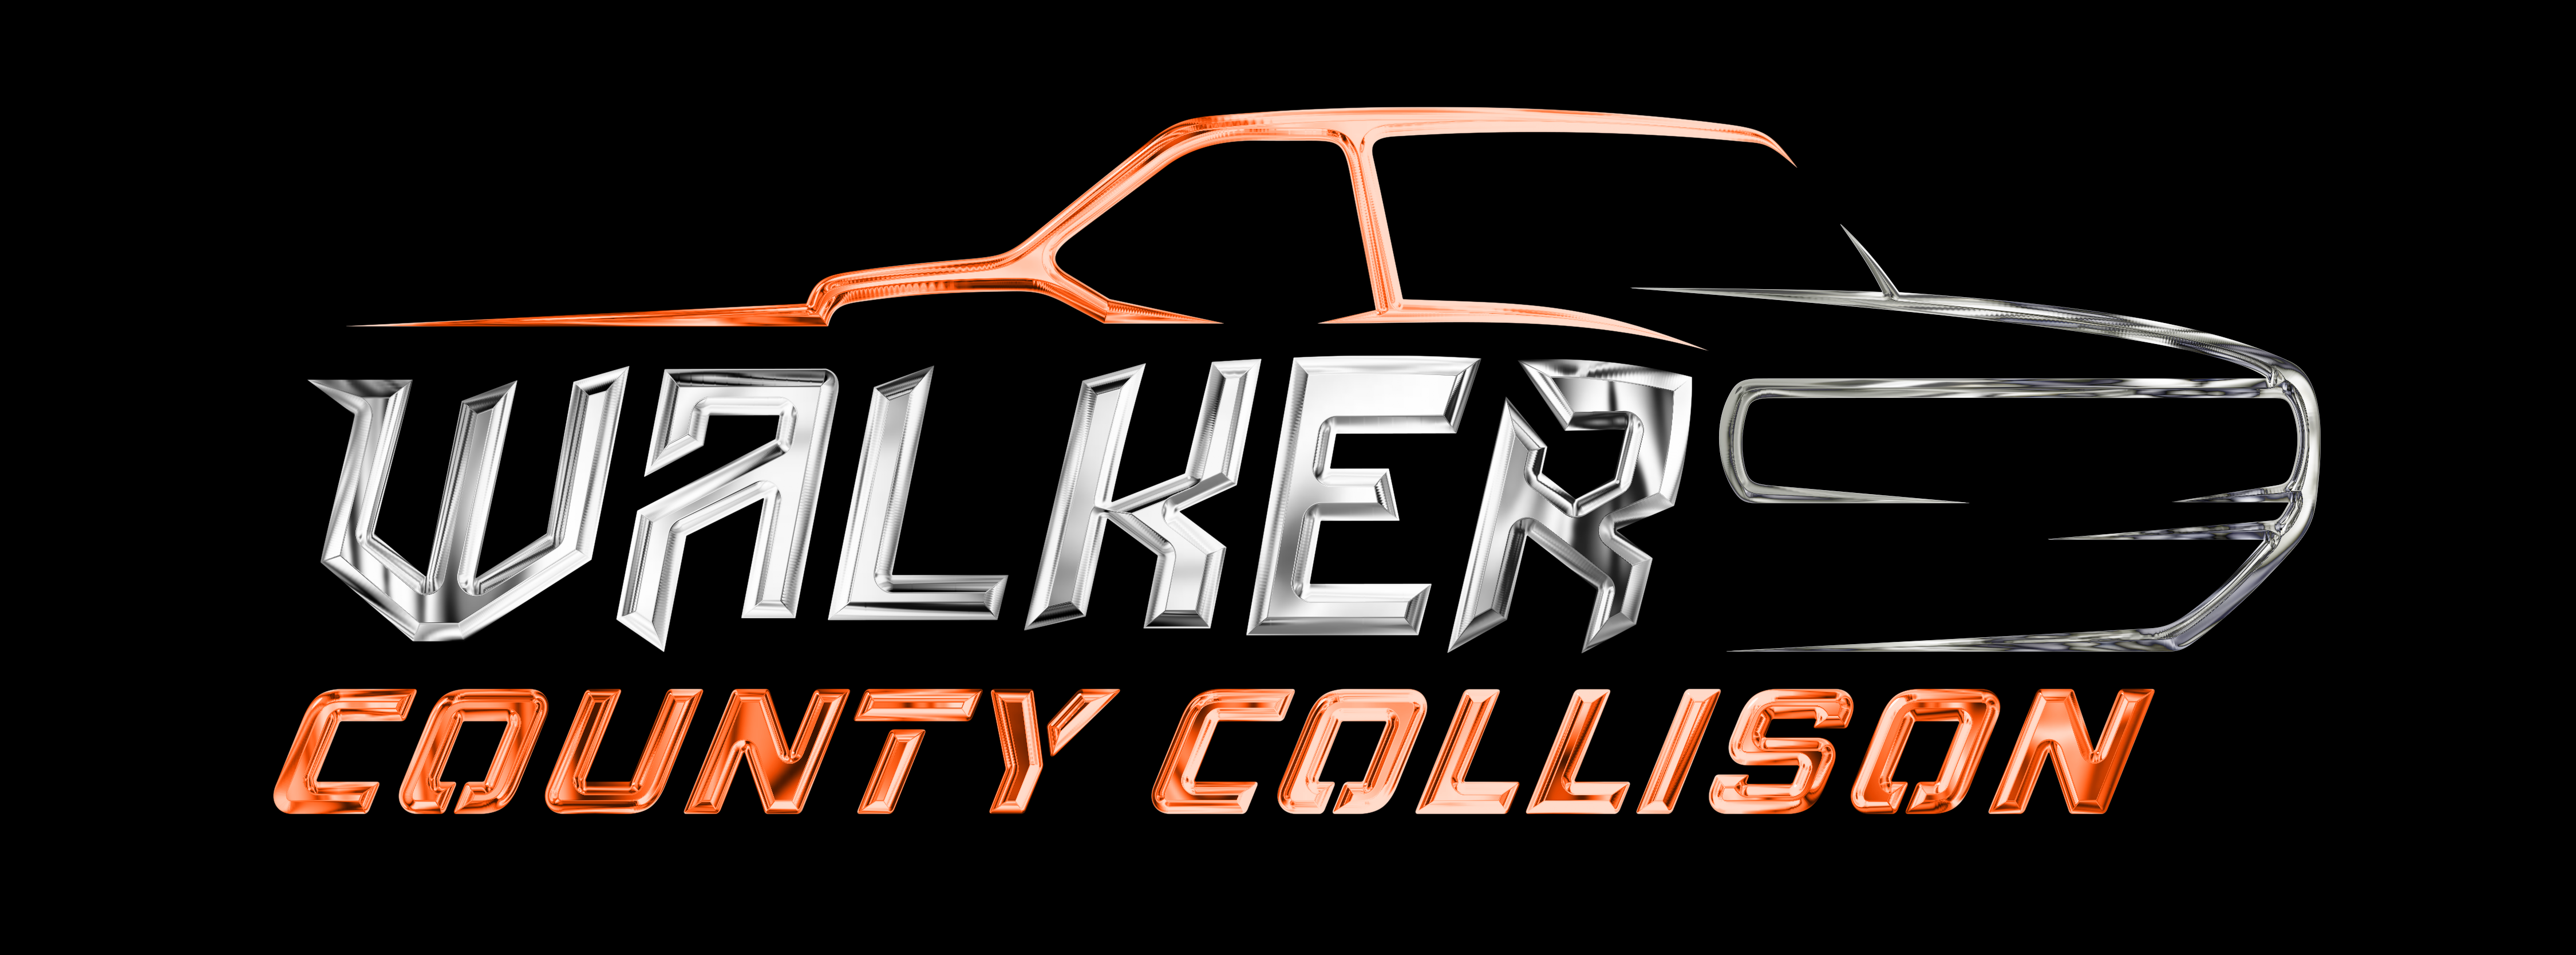 Walker County Collision